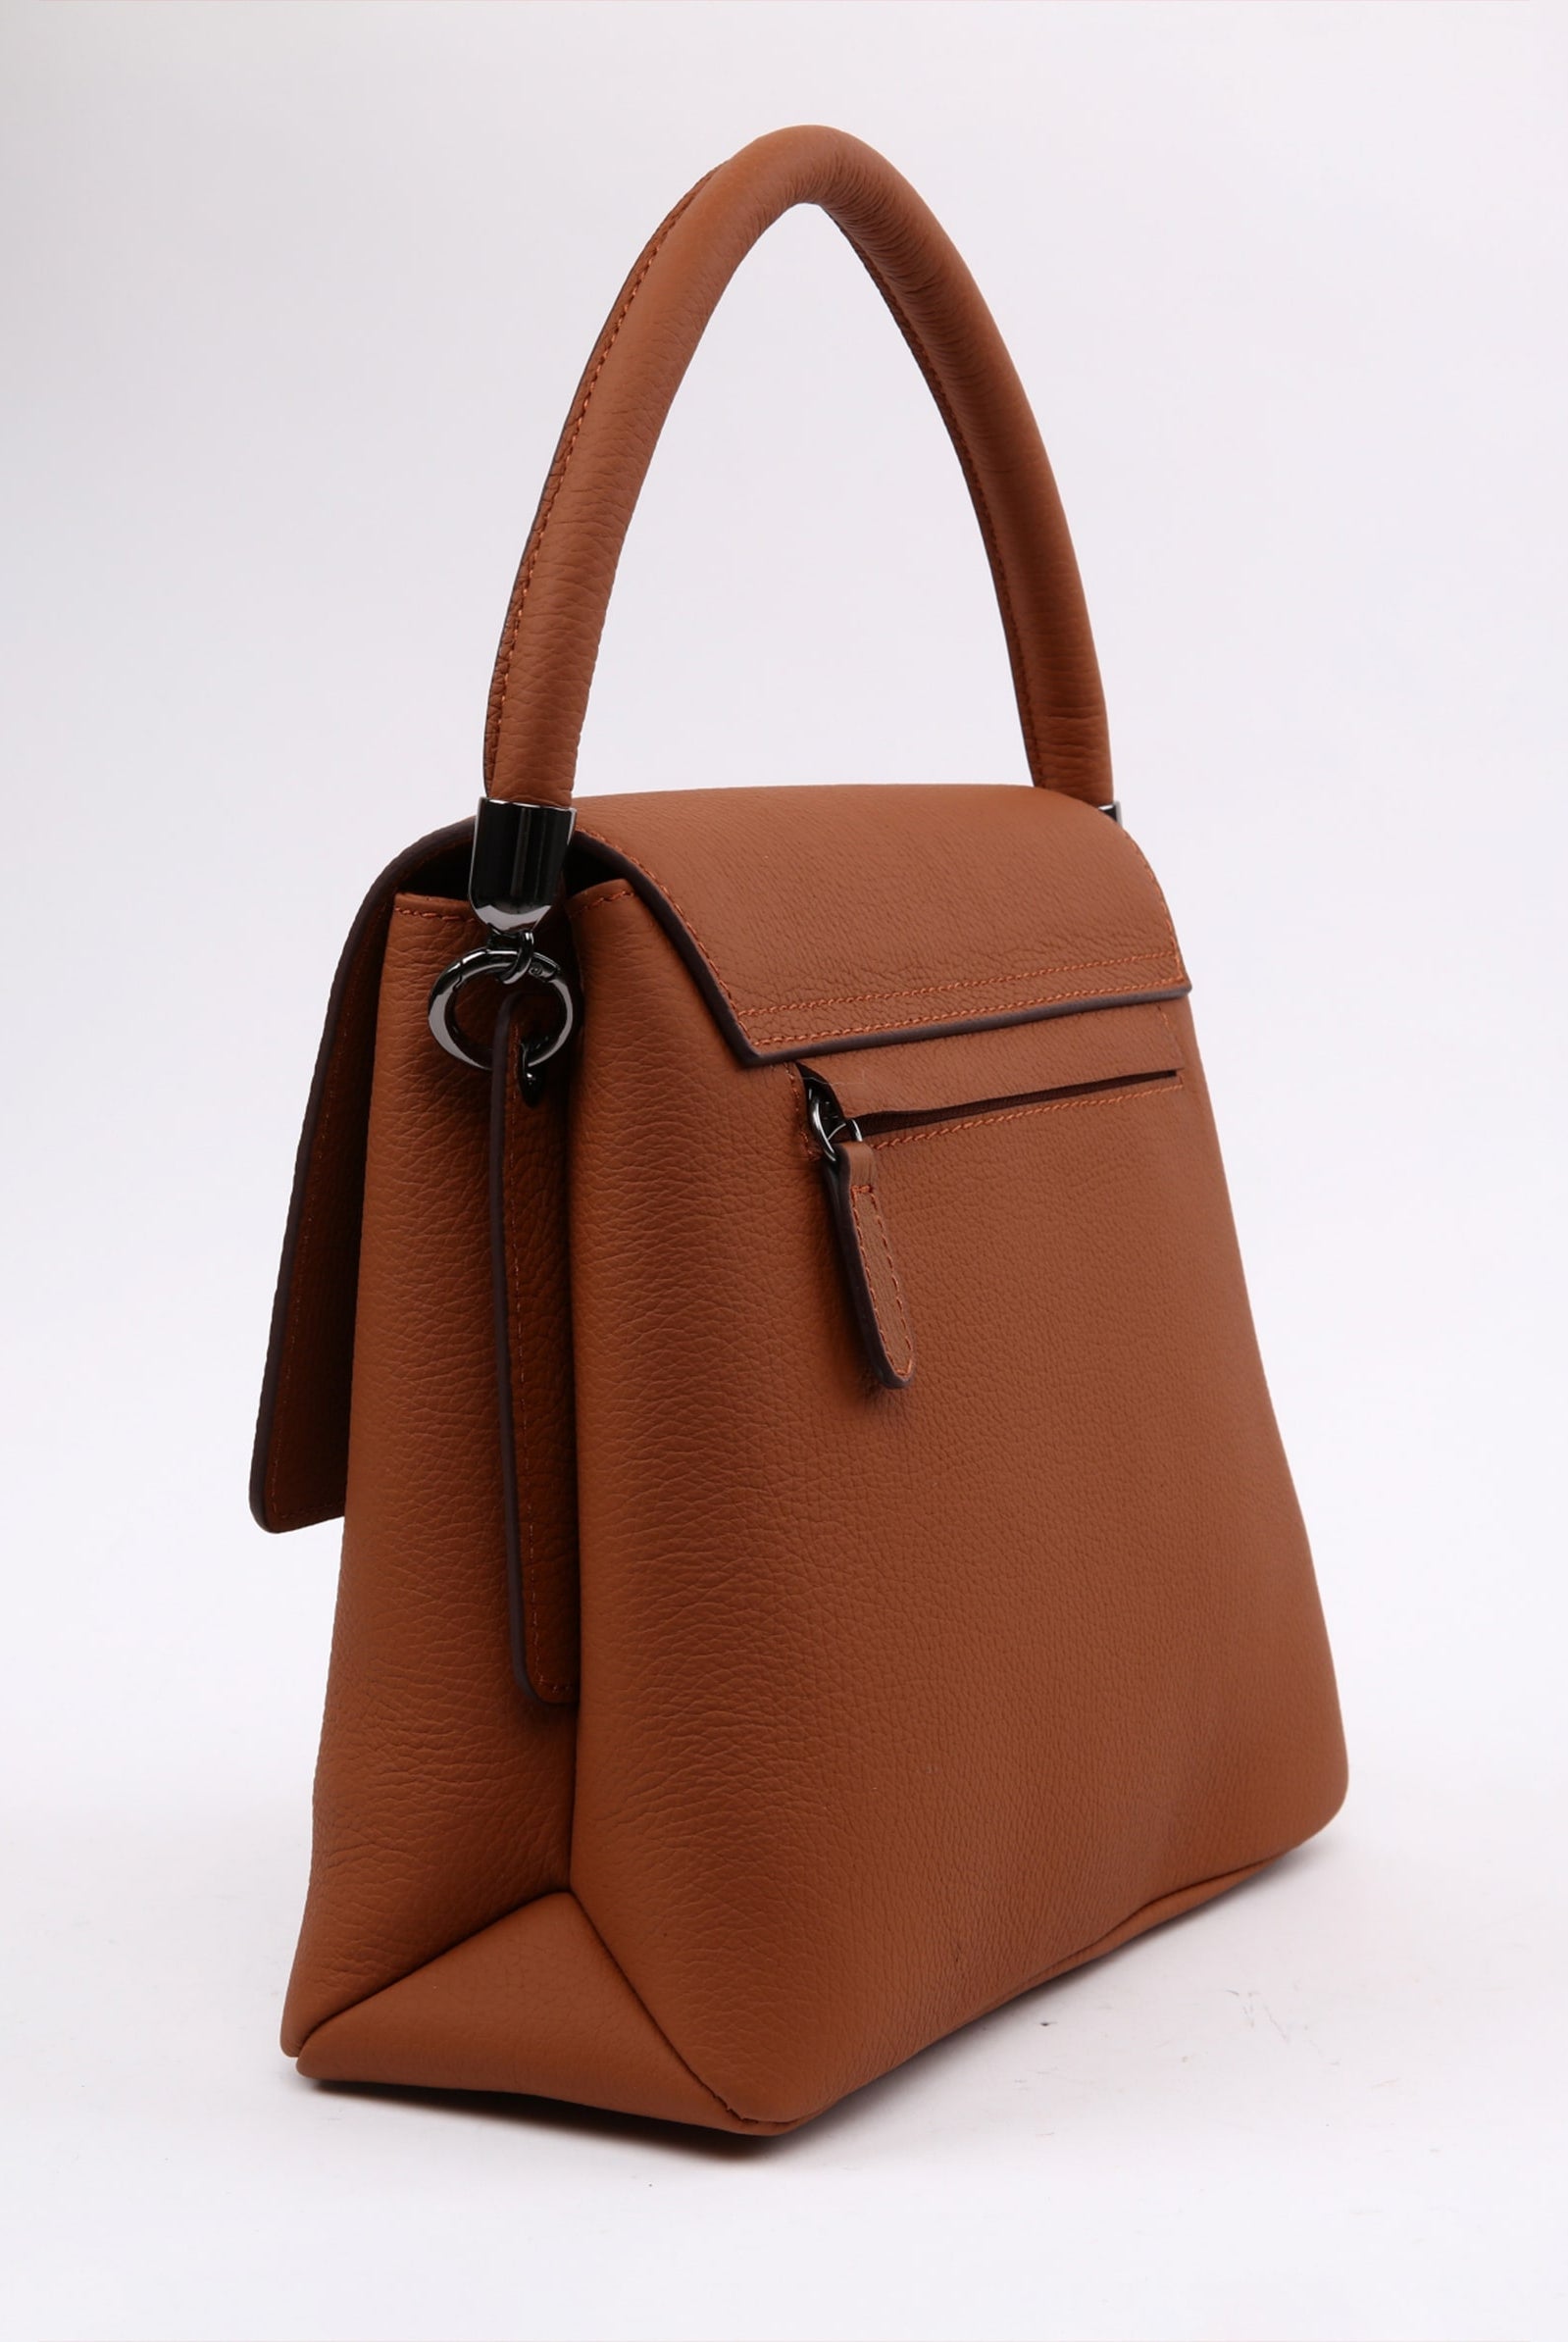 brown soft leather handbag